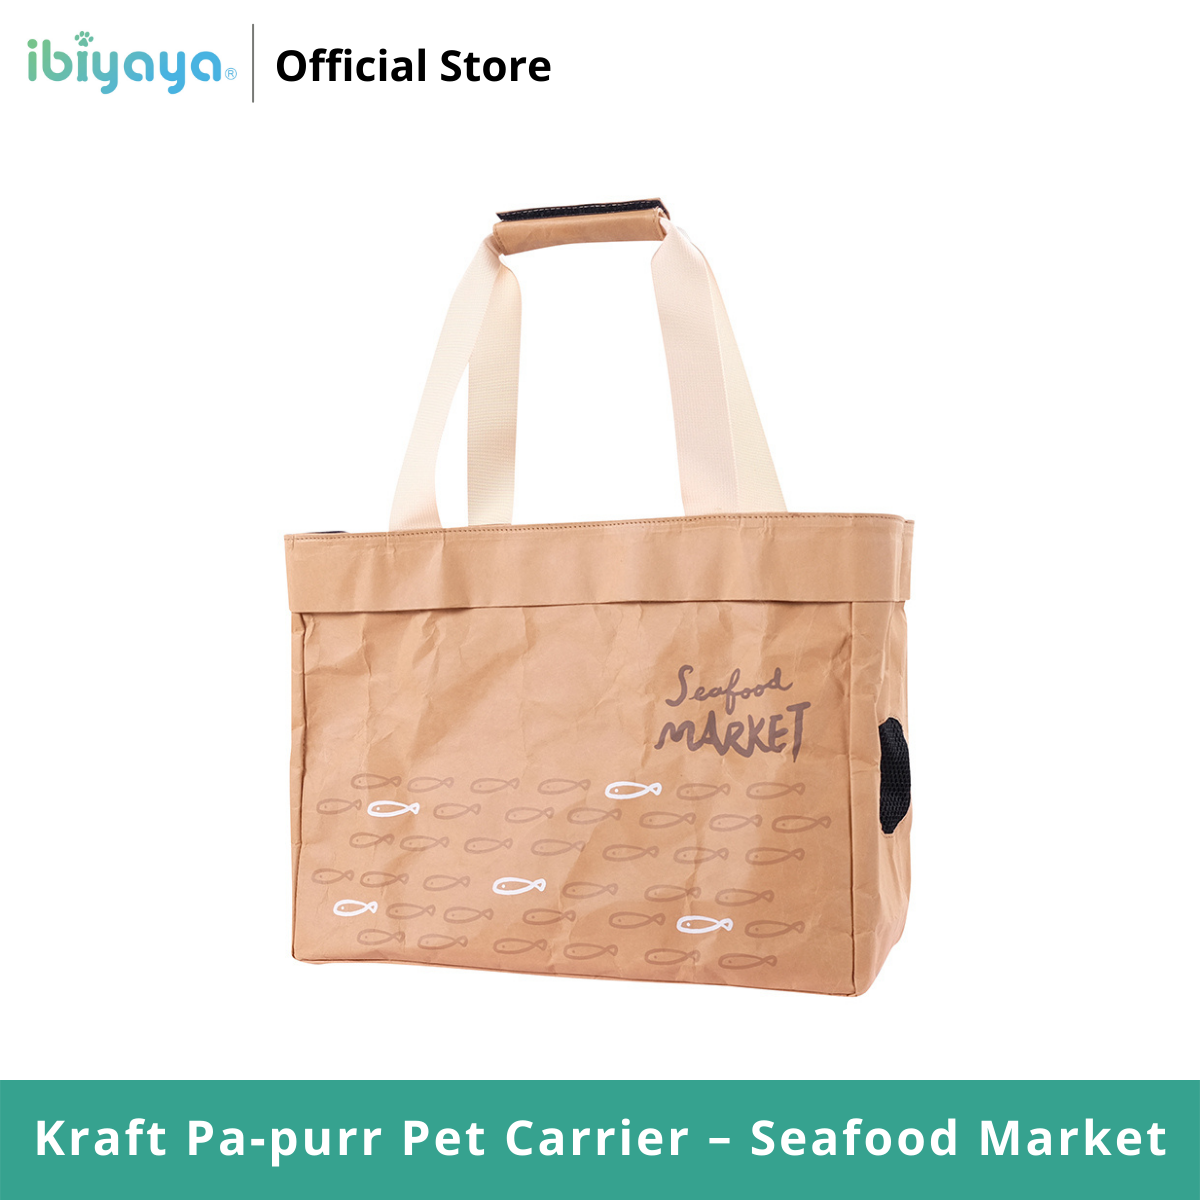 Ibiyaya Kraft Pa-purr Pet Carrier – Seafood Market กระเป๋าใส่สุนัข  กระเป๋าใส่สัตว์เลี้ยง Kraft Pa-purr Pet Carrier รับน้ำหนักได้ 6 Kg. ลาย  Seafood Market